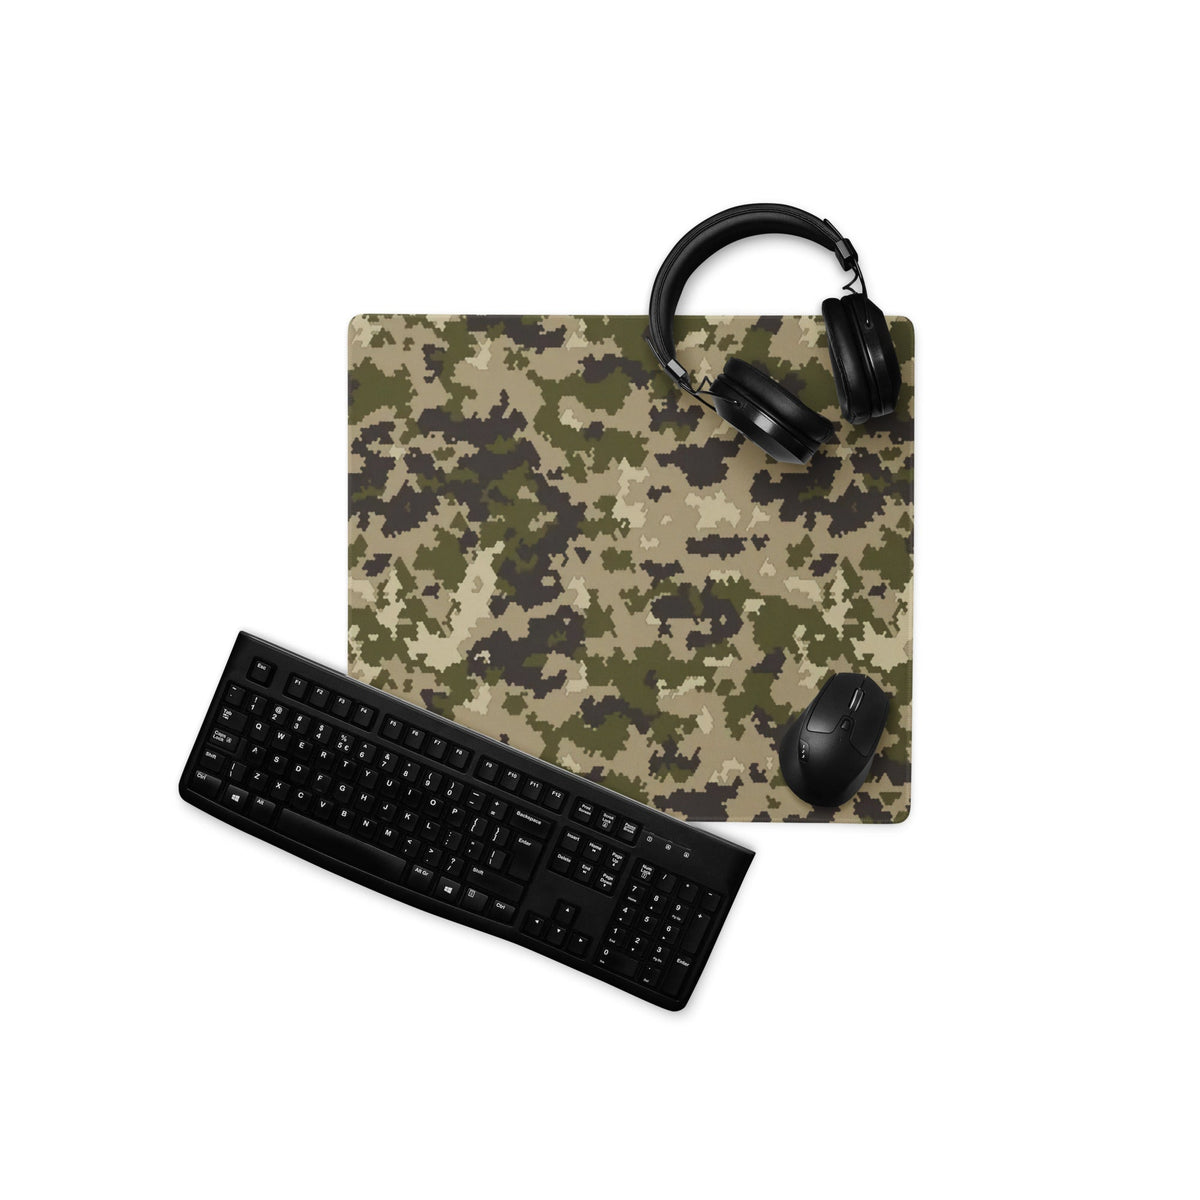 Armed Assault CSAT Multi CAMO Gaming mouse pad - 18″×16″